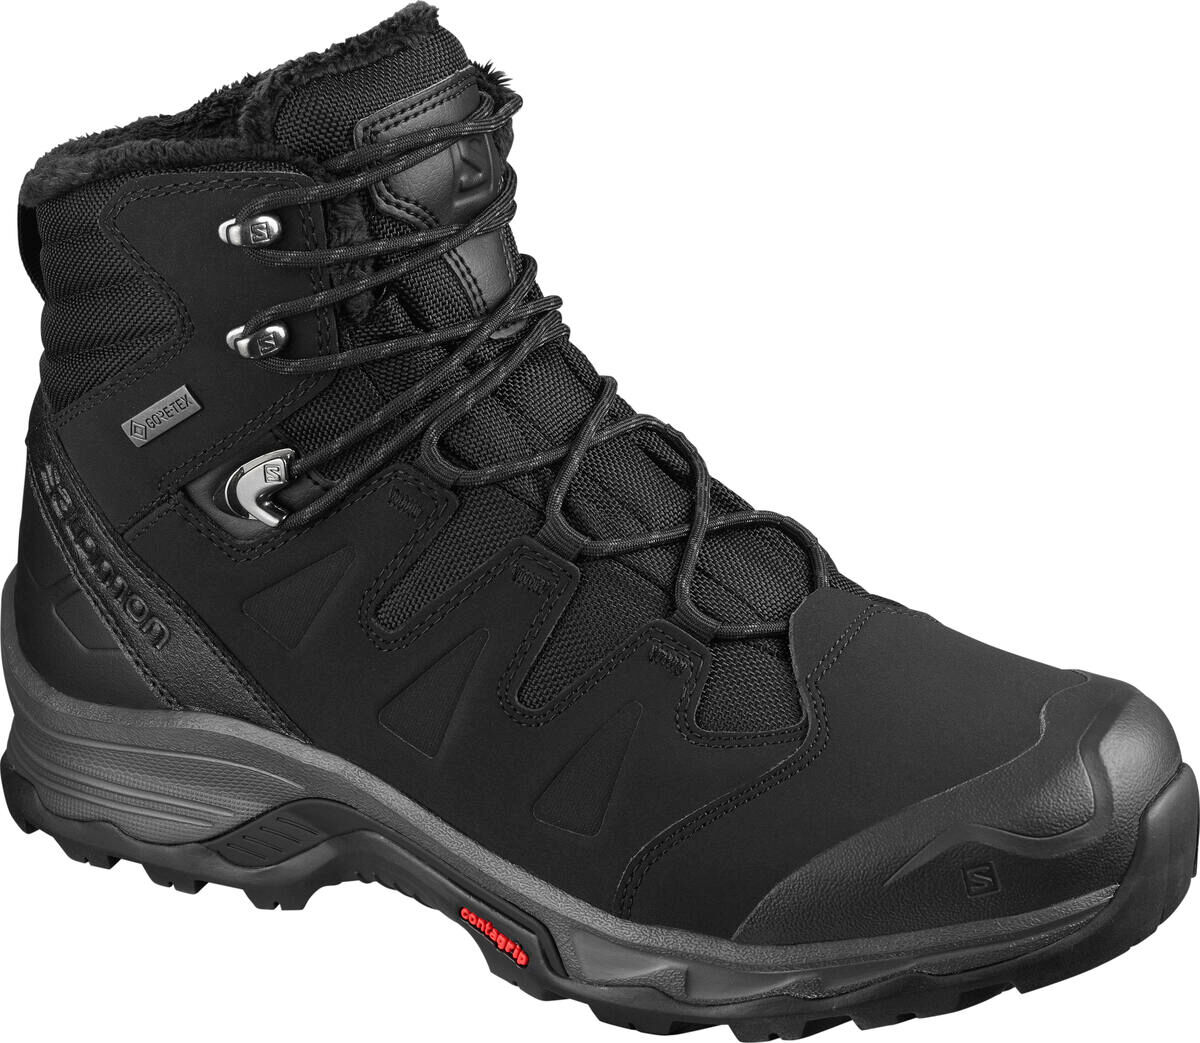 Salomon - Quest Winter GTX® - Hiking boots - Men's